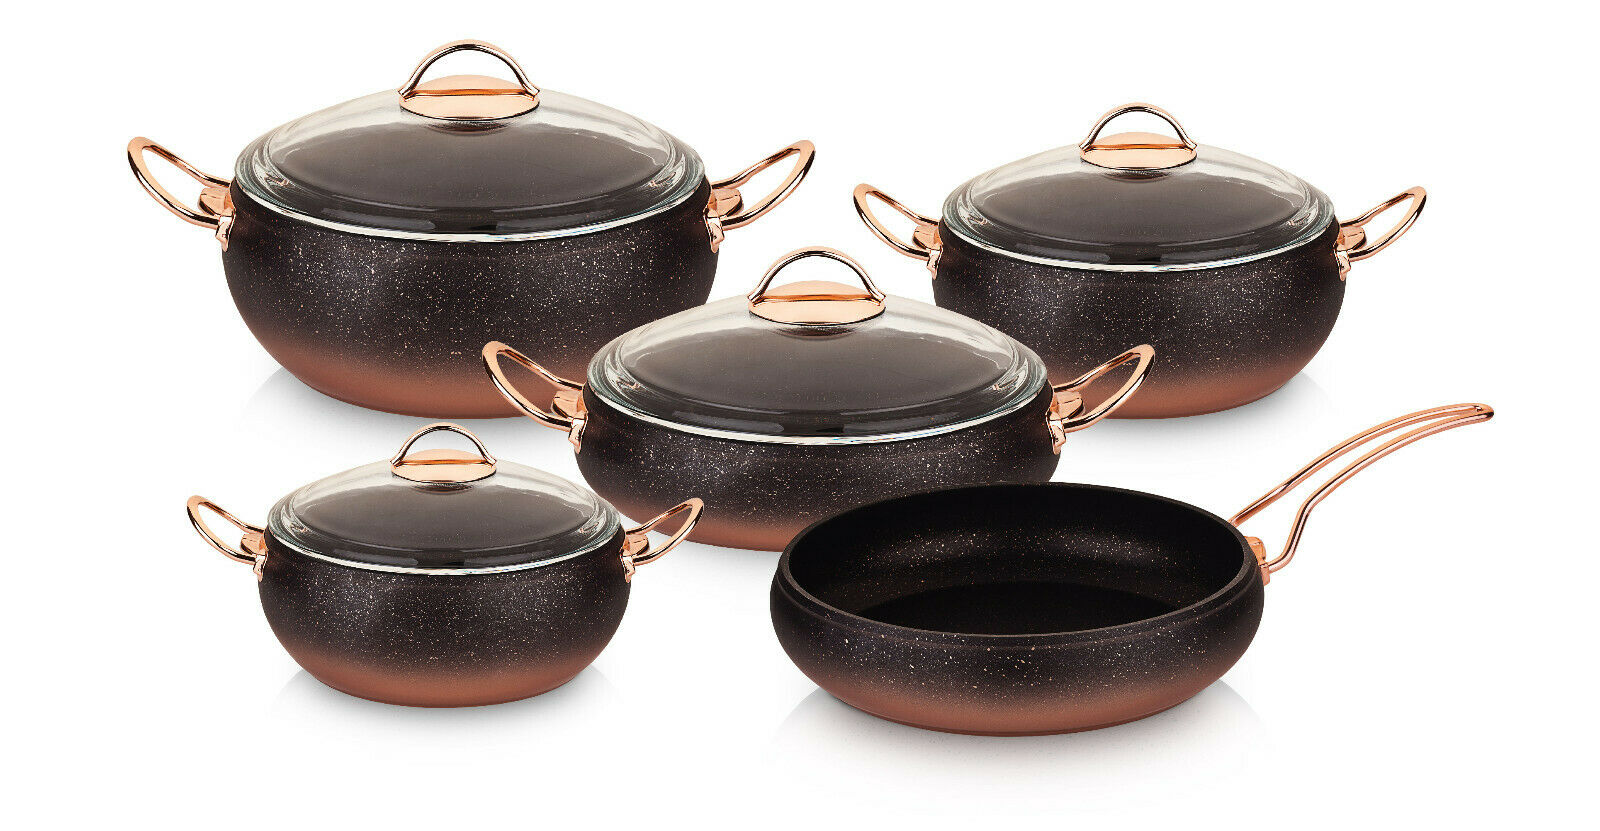 O.M.S. Granite Copper 9 Piece Cookware Set With Glass Lids Casserole Pan Pot